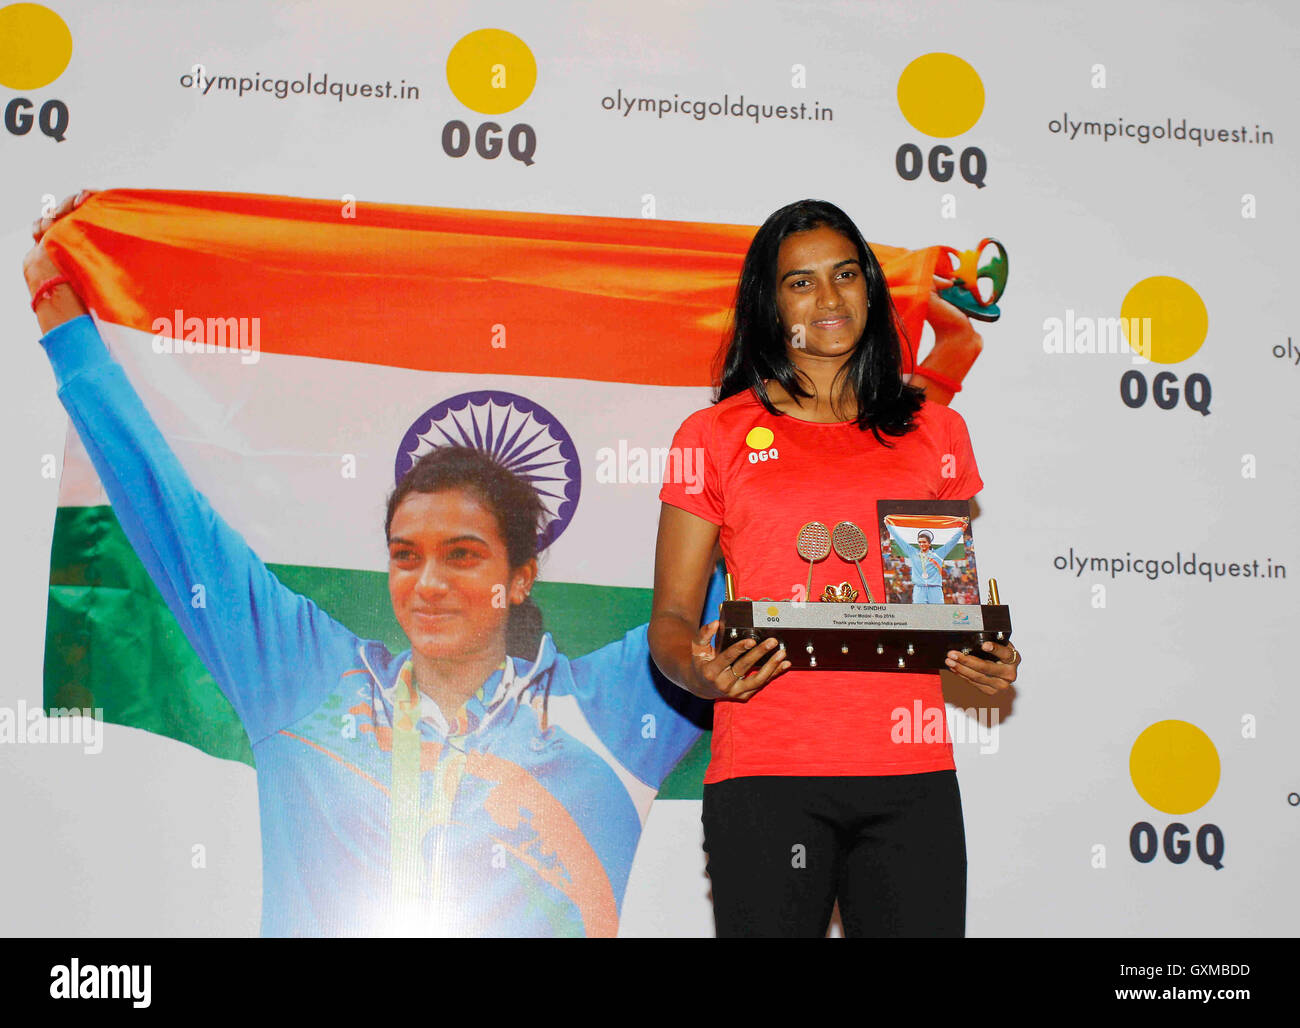 Indische Badmintonspielerin Rio Olympia Silber Medallisat P V Sindhu Glückwünsche Funktion organisiert Olympic Gold Quest-Mumbai Stockfoto